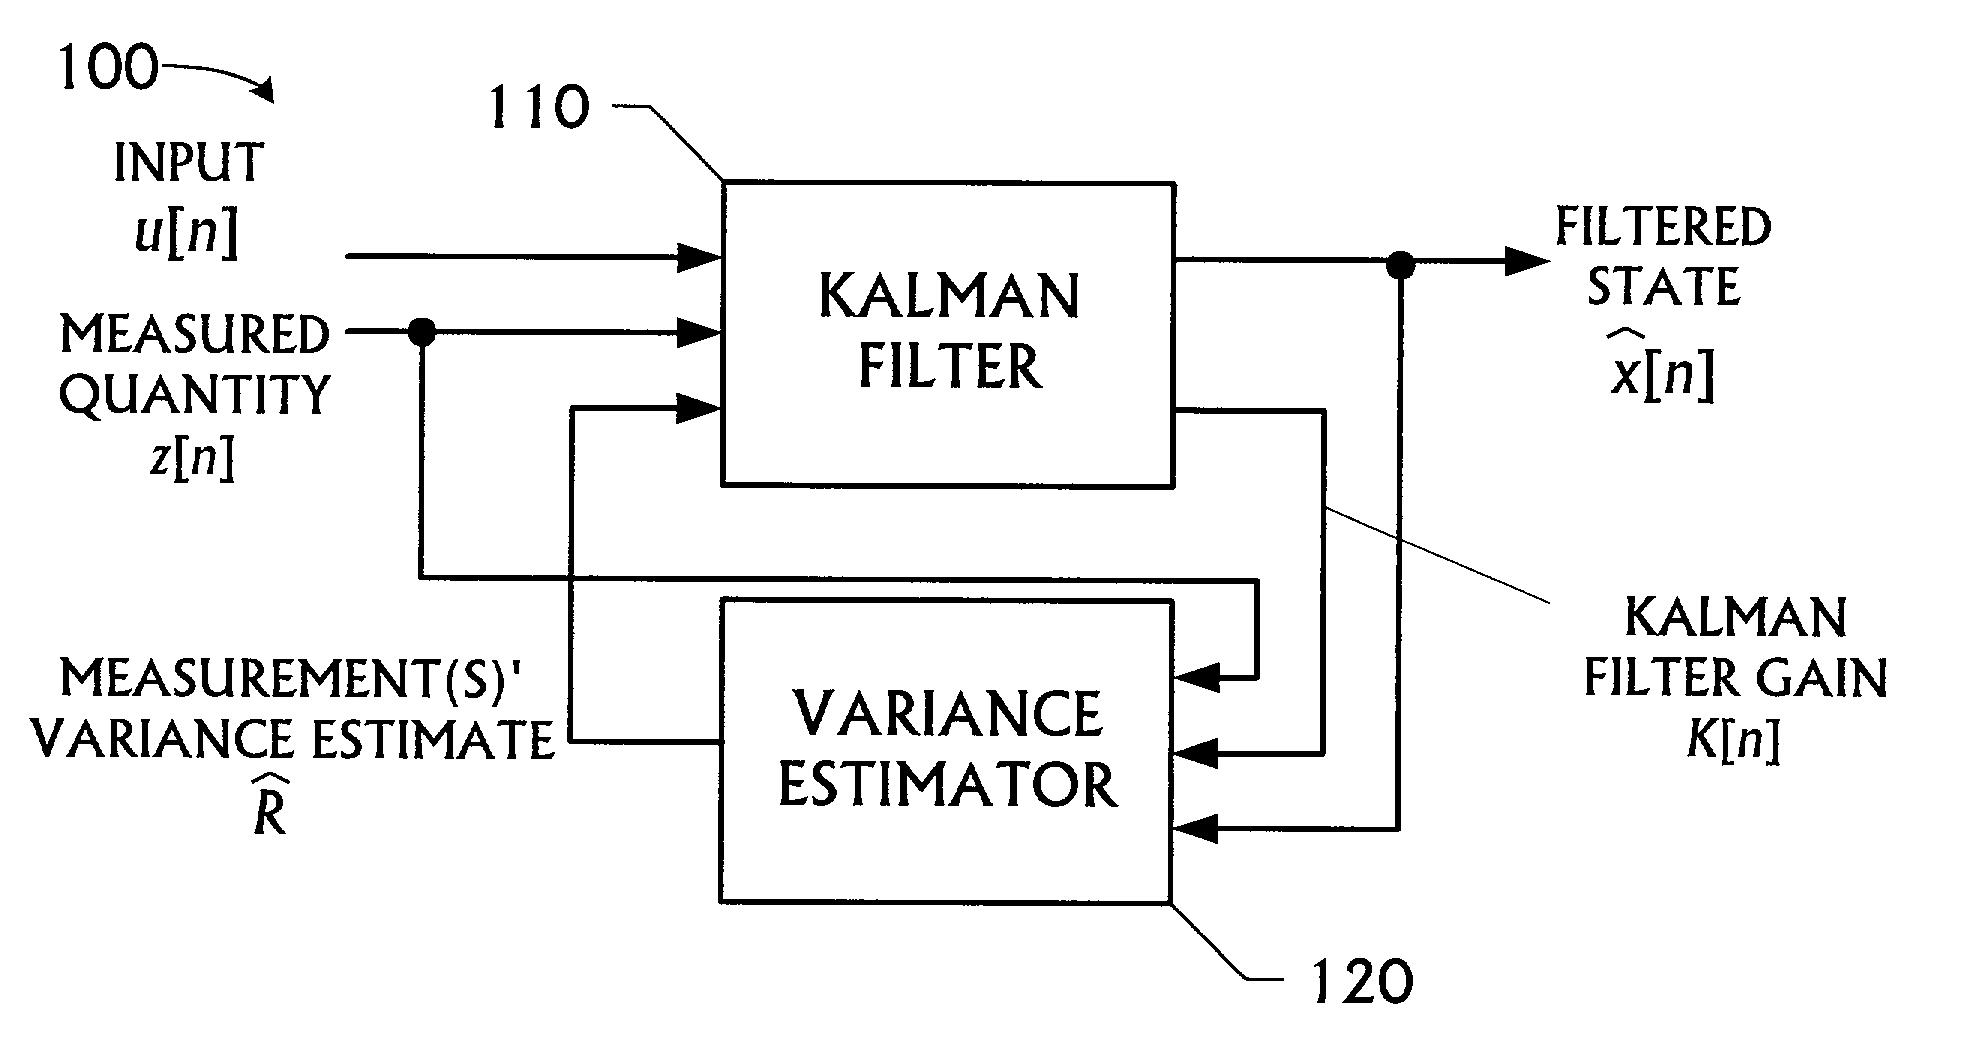 Kalman filter with adaptive measurement variance estimator